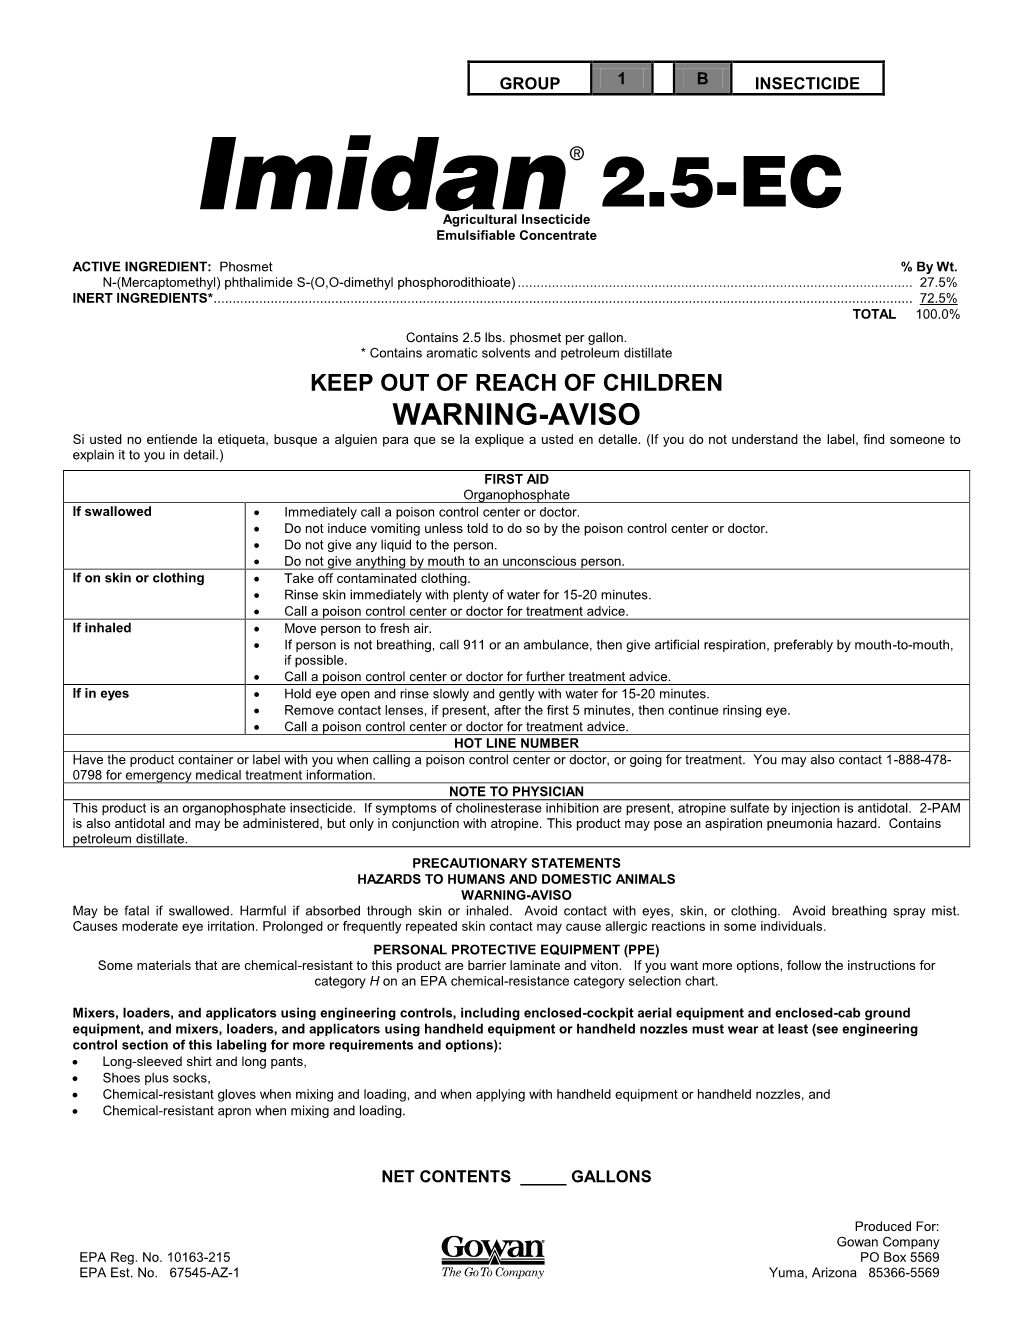 Imidan 2.5EC Label